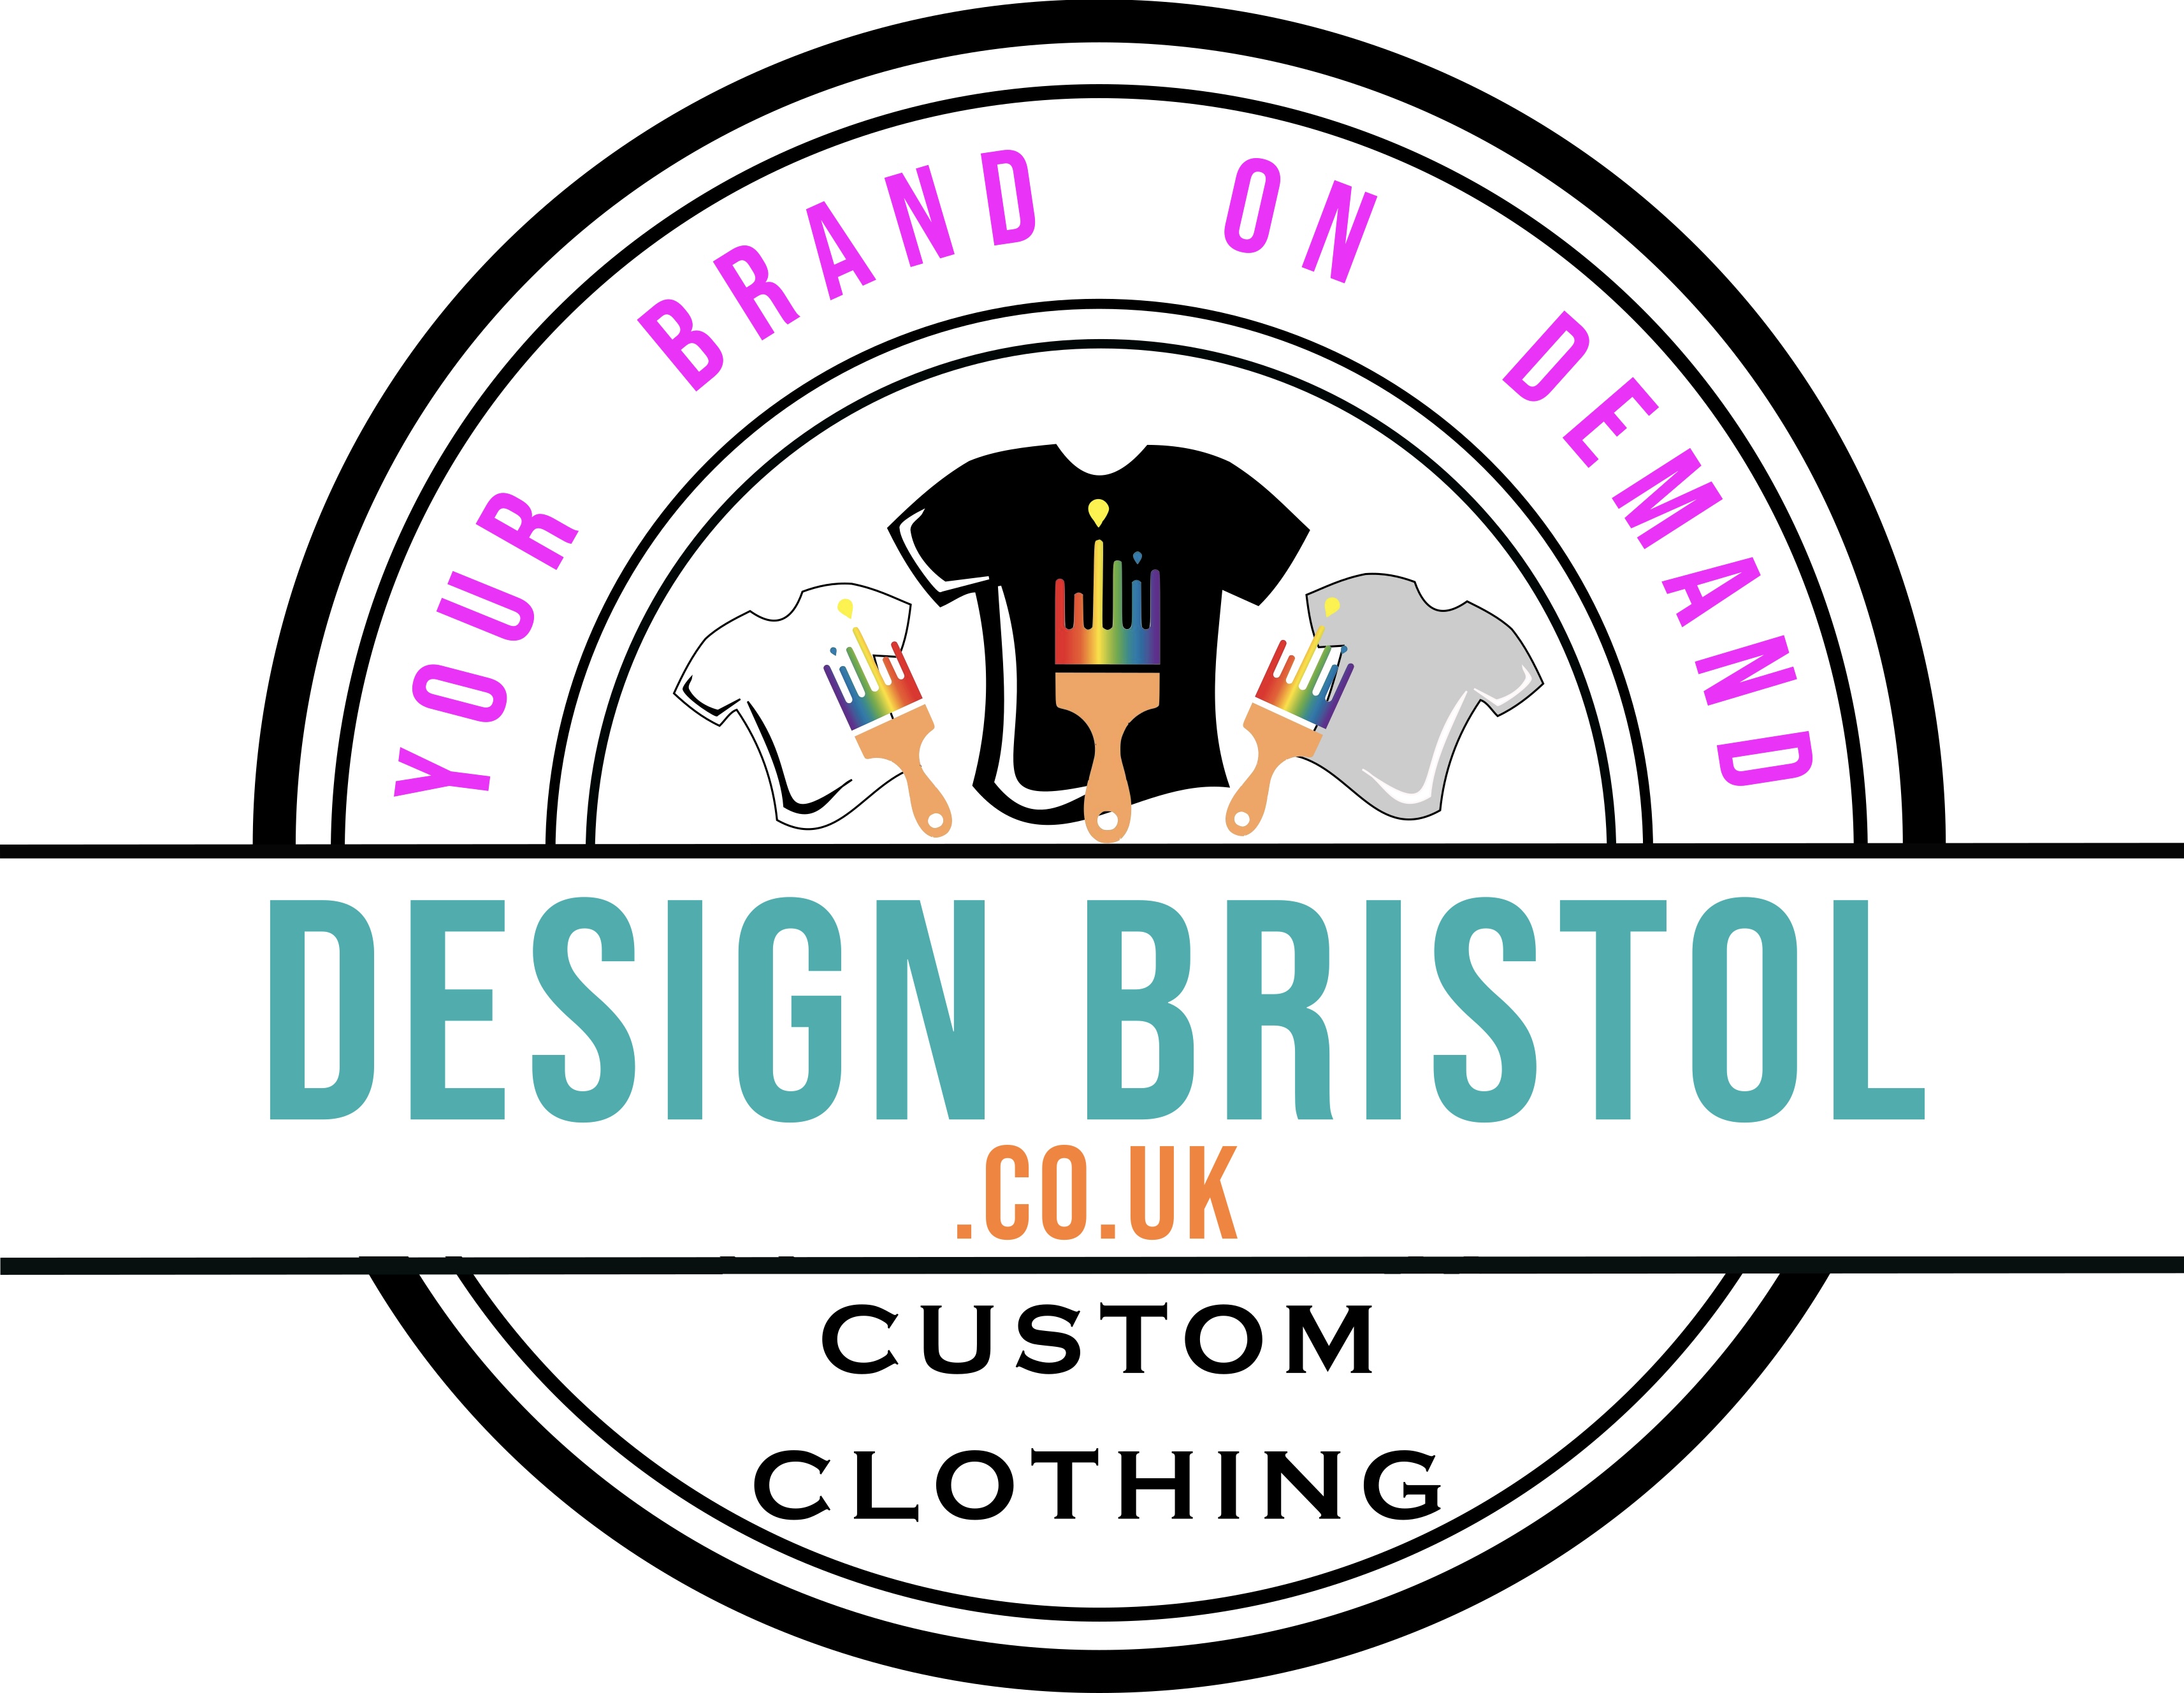 Design Bristol